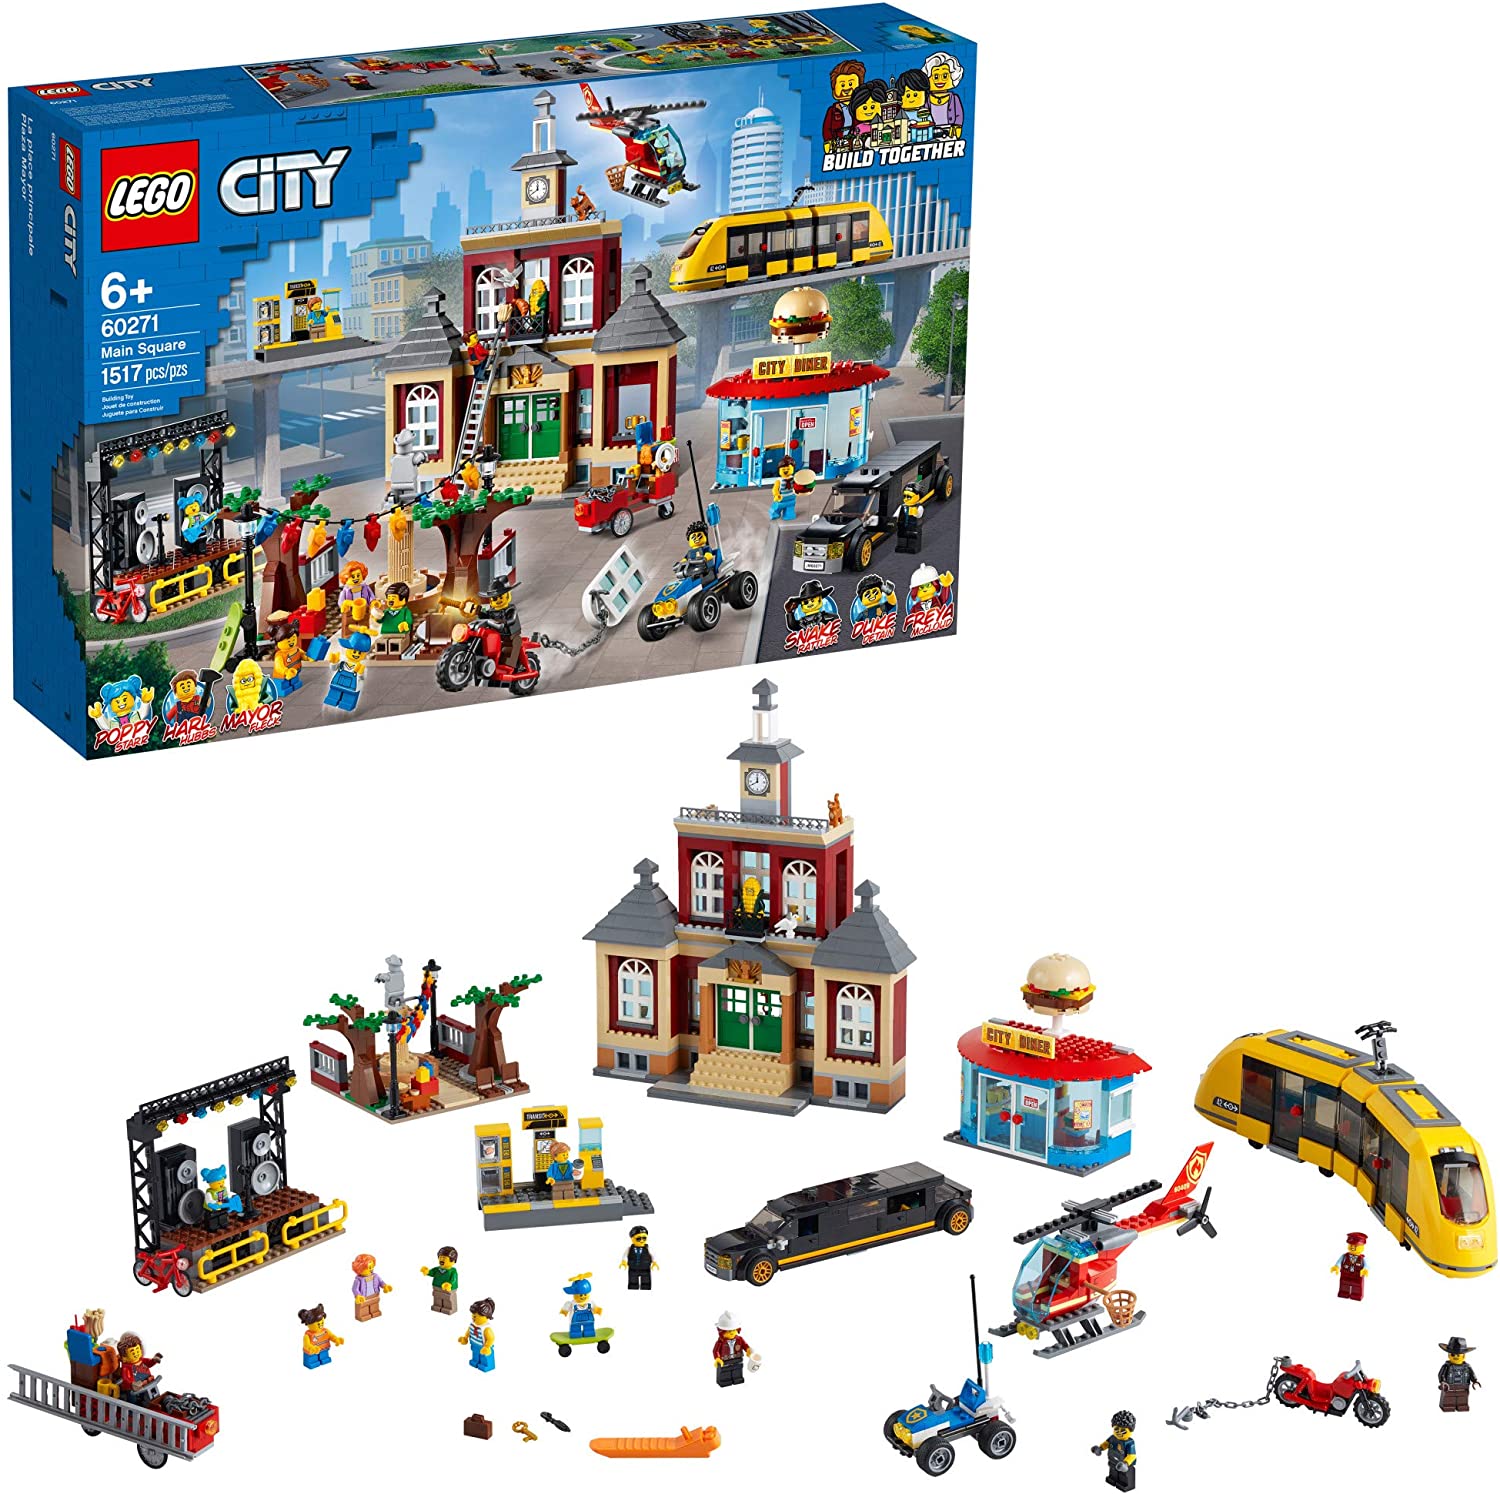 1517-Piece Lego City Main Square Building Set (2021) $125 + Free Shipping w/ Prime